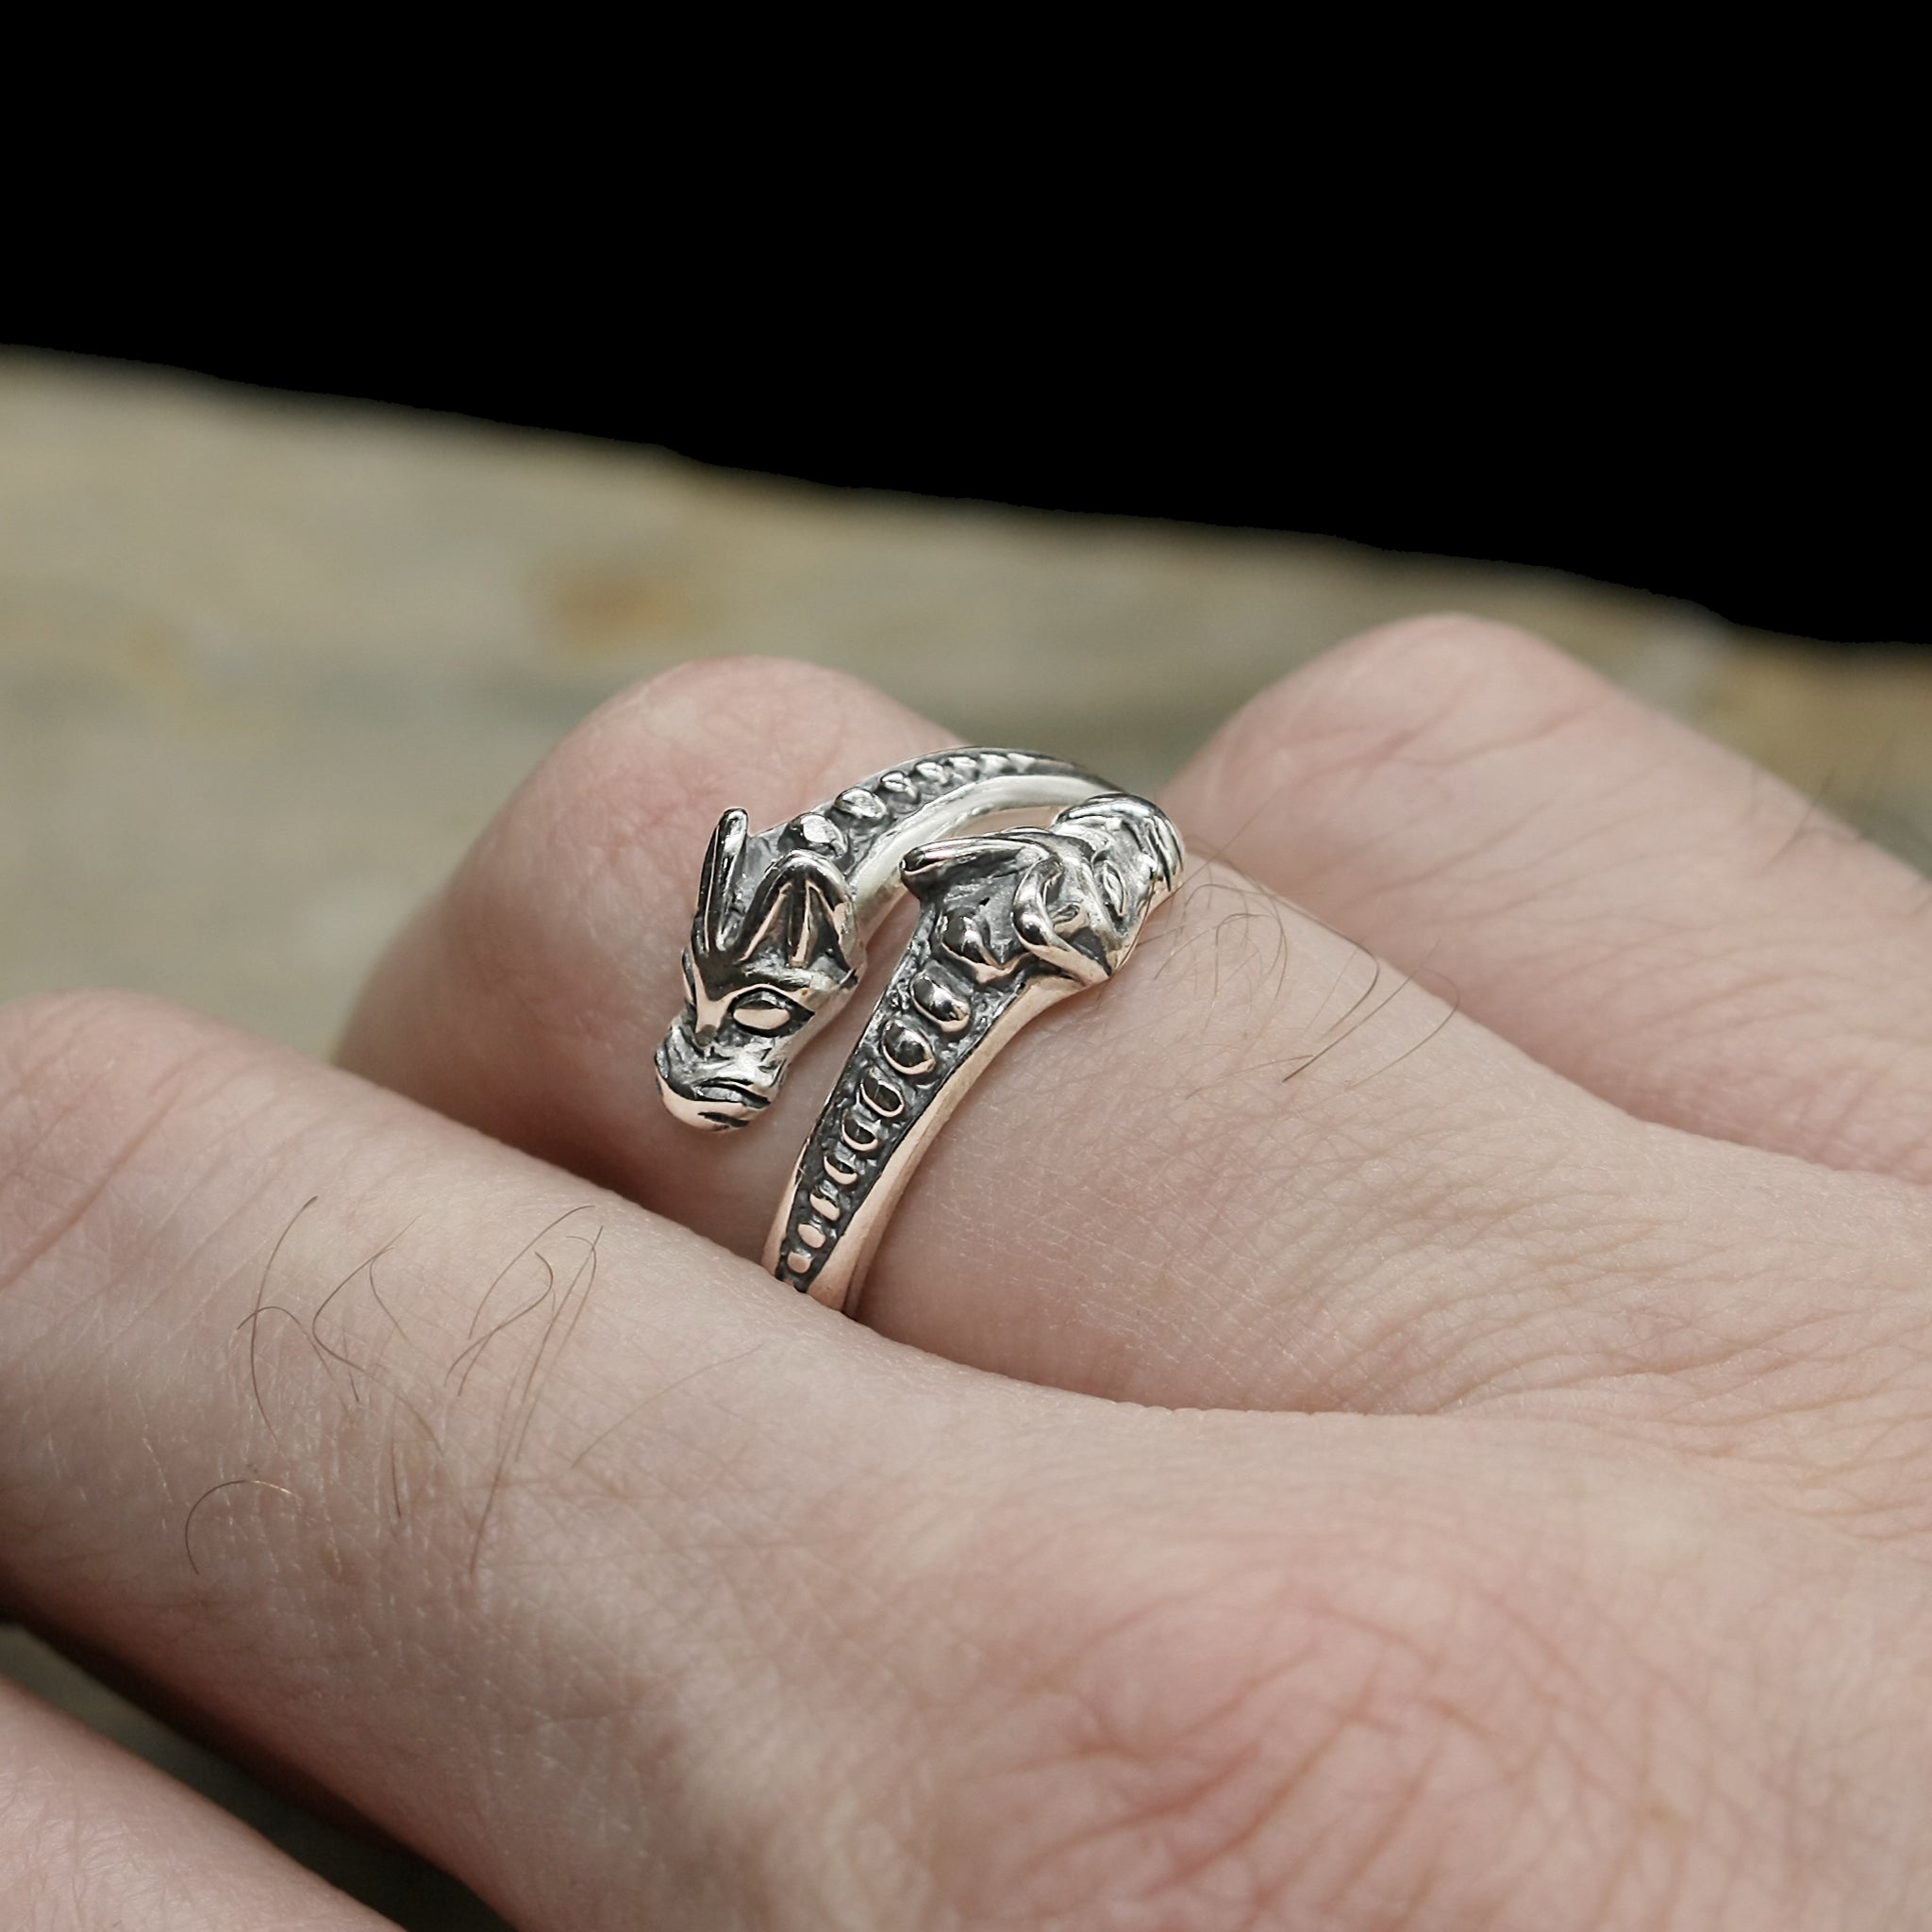 Silver Ridged Viking Wolf Ring on Hand